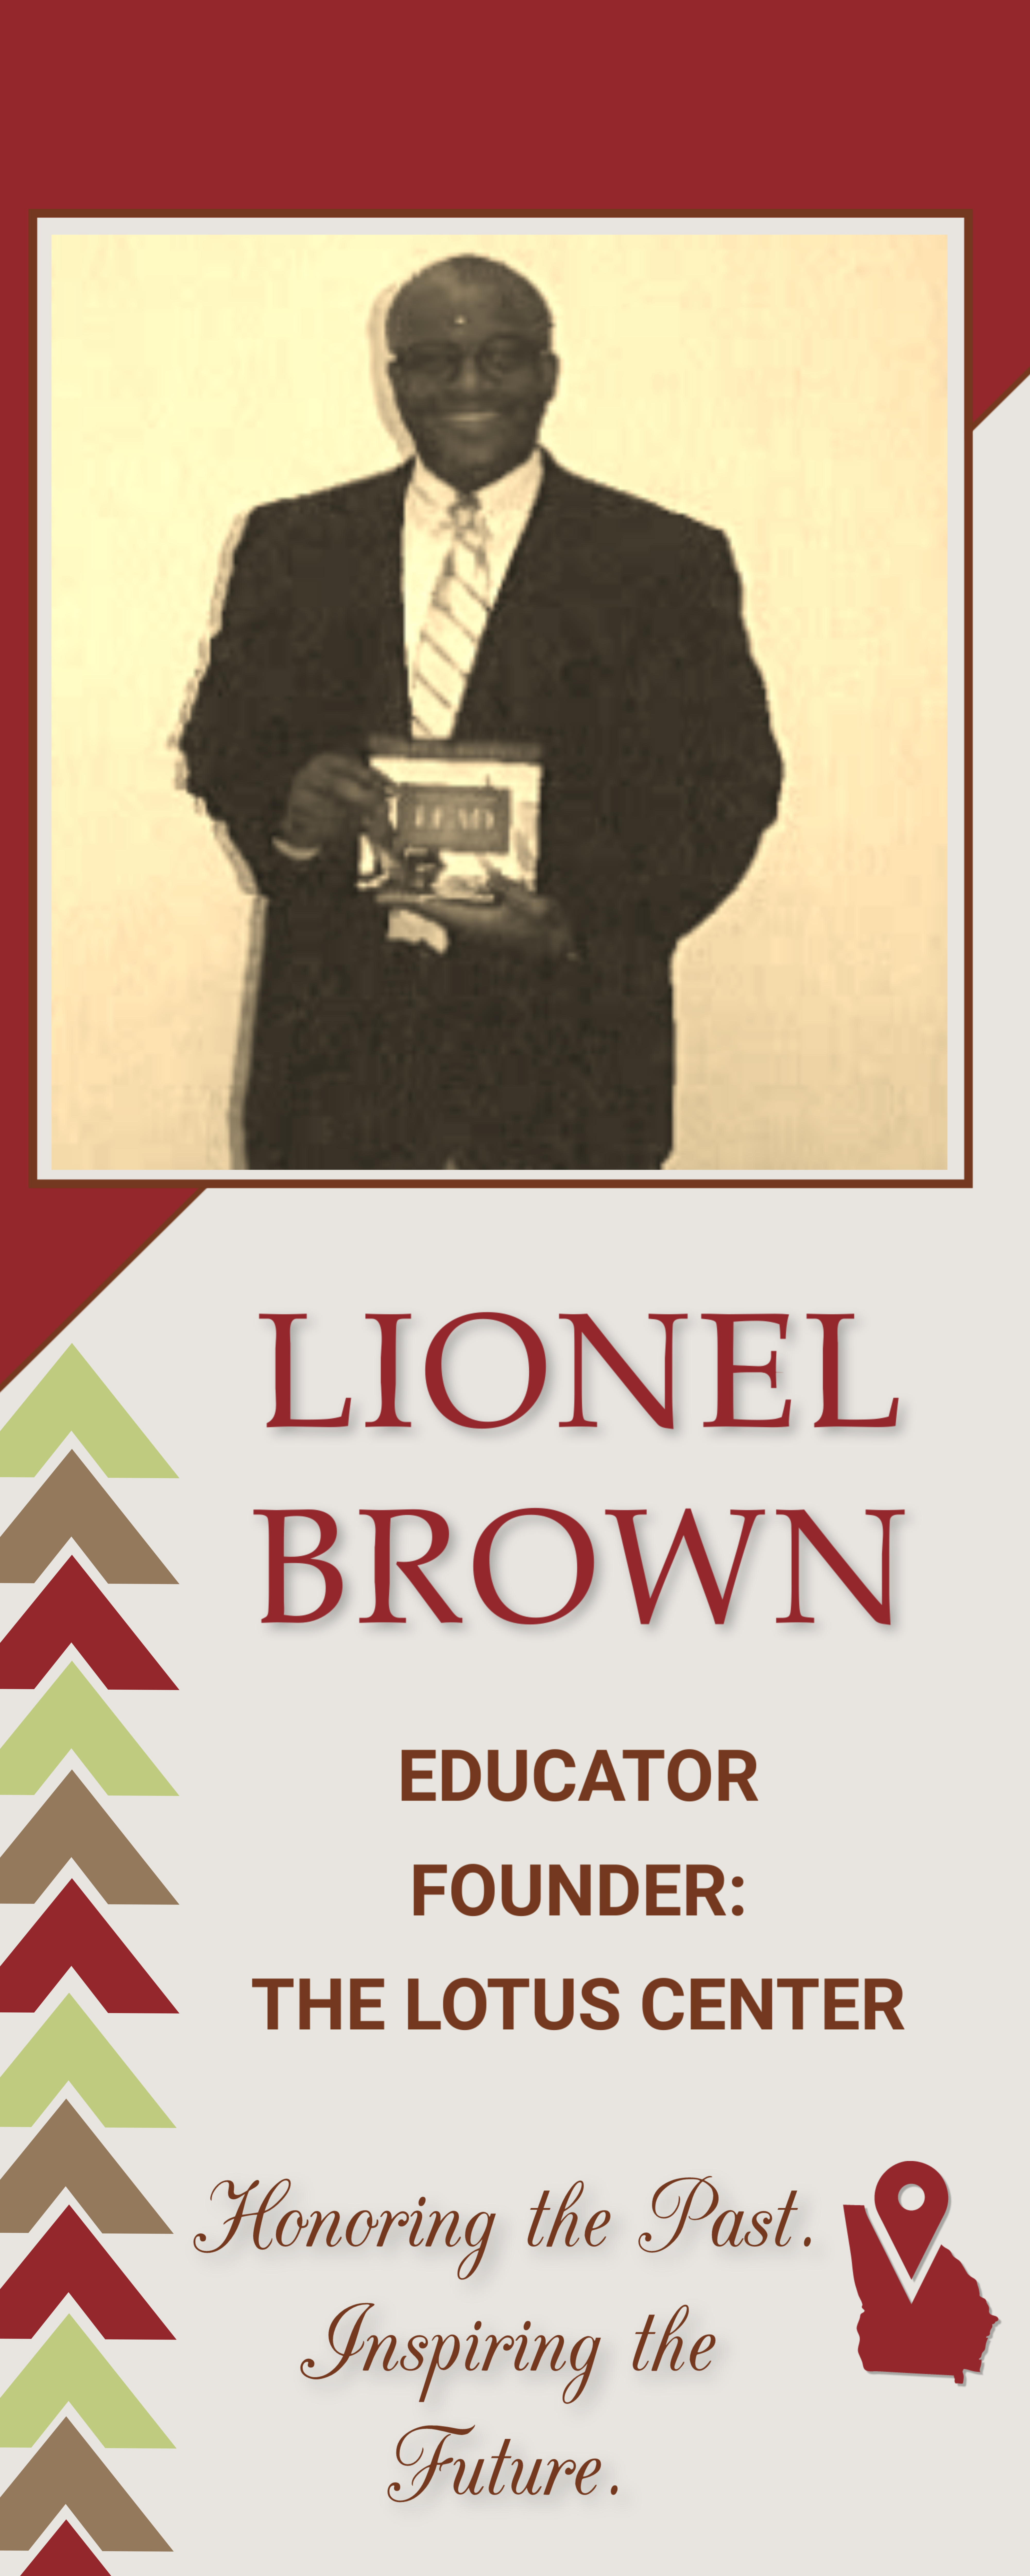 Lionel Brown